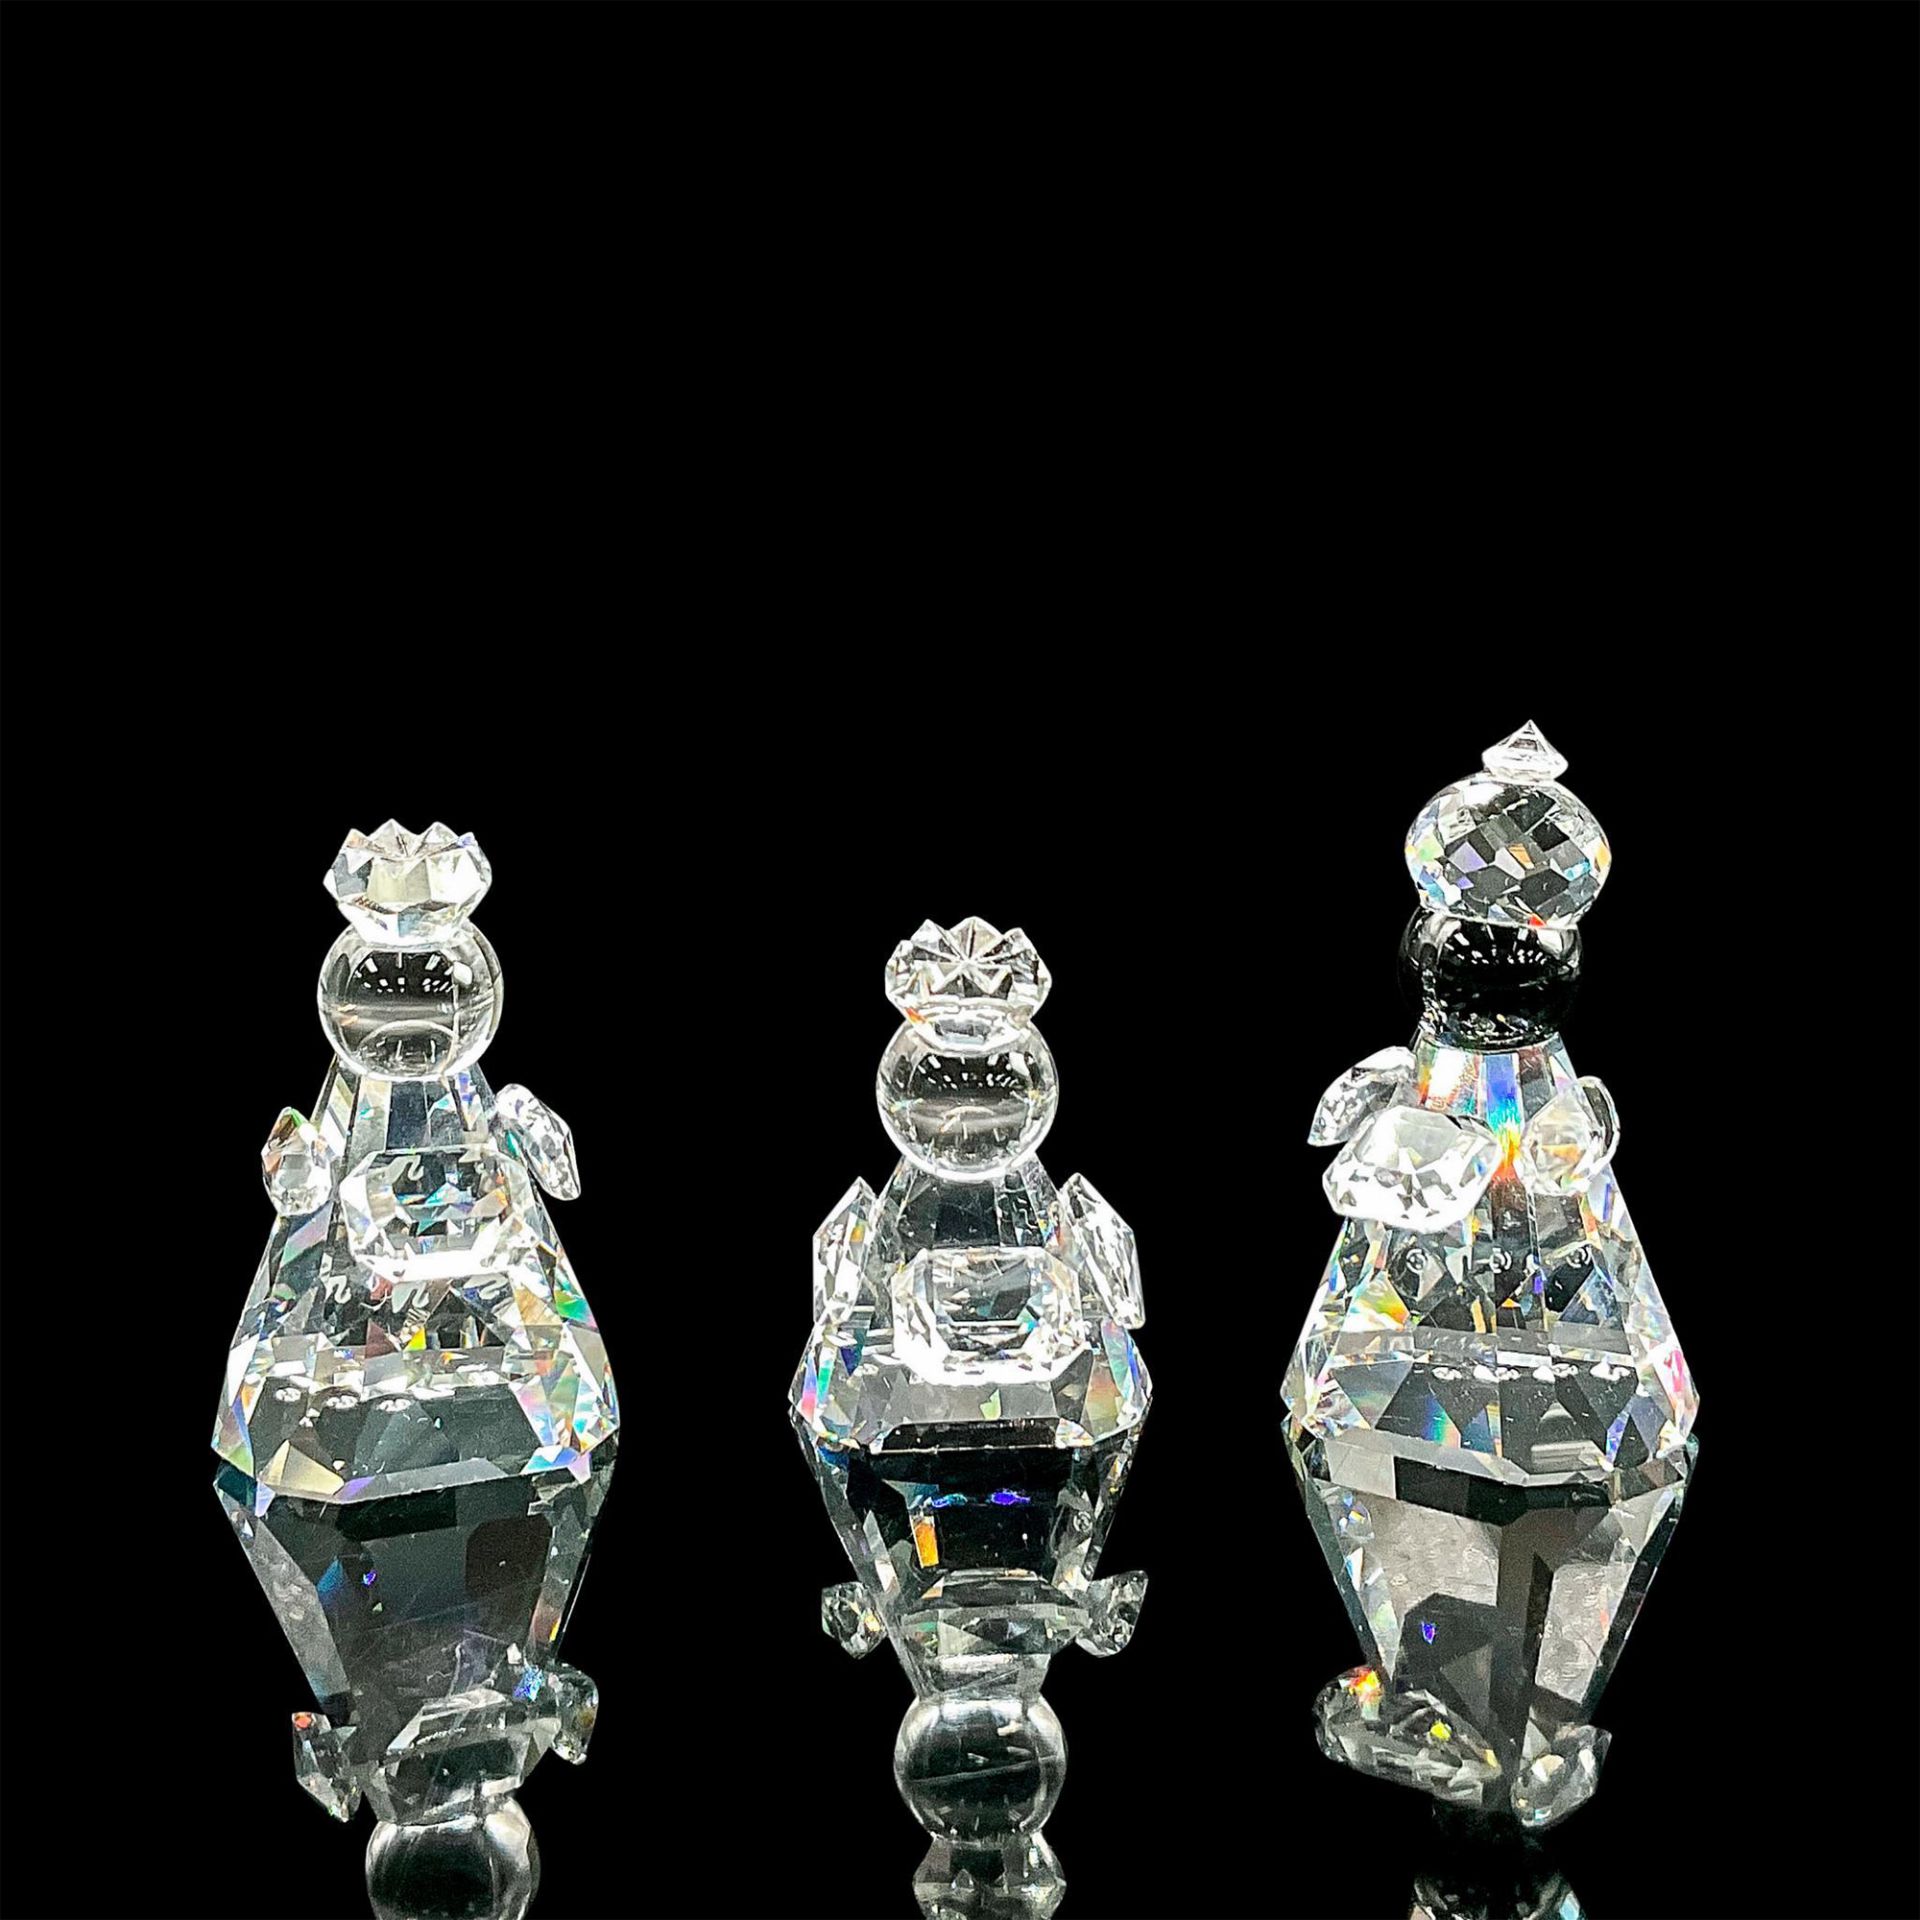 Swarovski Silver Crystal Figurine, Nativity Wise Men/Kings